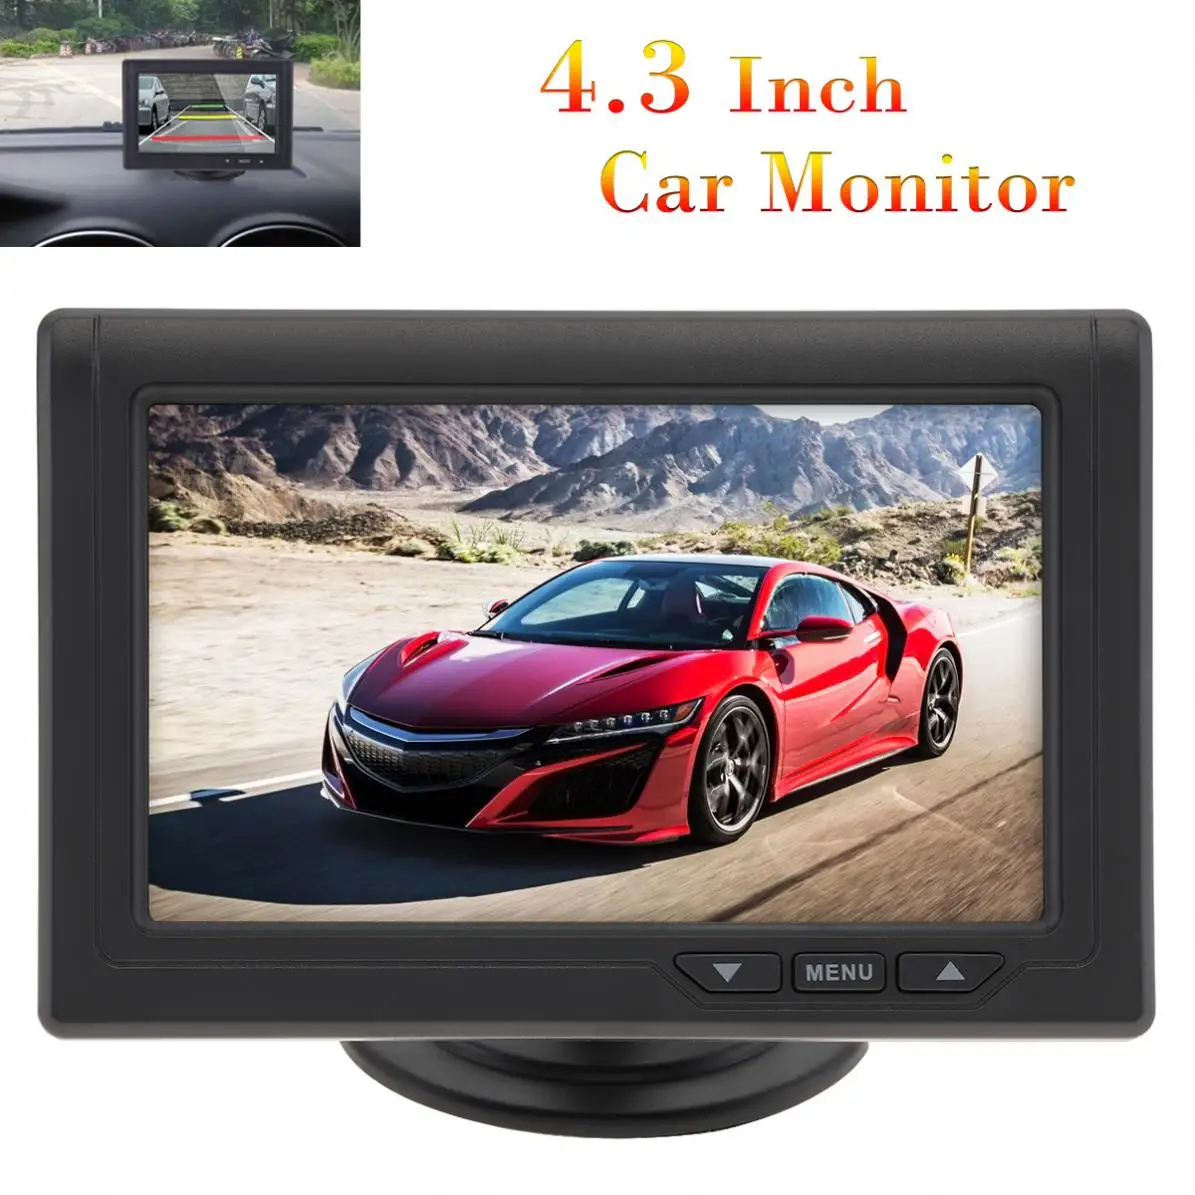 

CAR HORIZON Universal 4.3 Inch Car Monitor TFT LCD 480 x 272 16:9 Screen 2 Way Video Input For Rear View Backup Reverse Camera